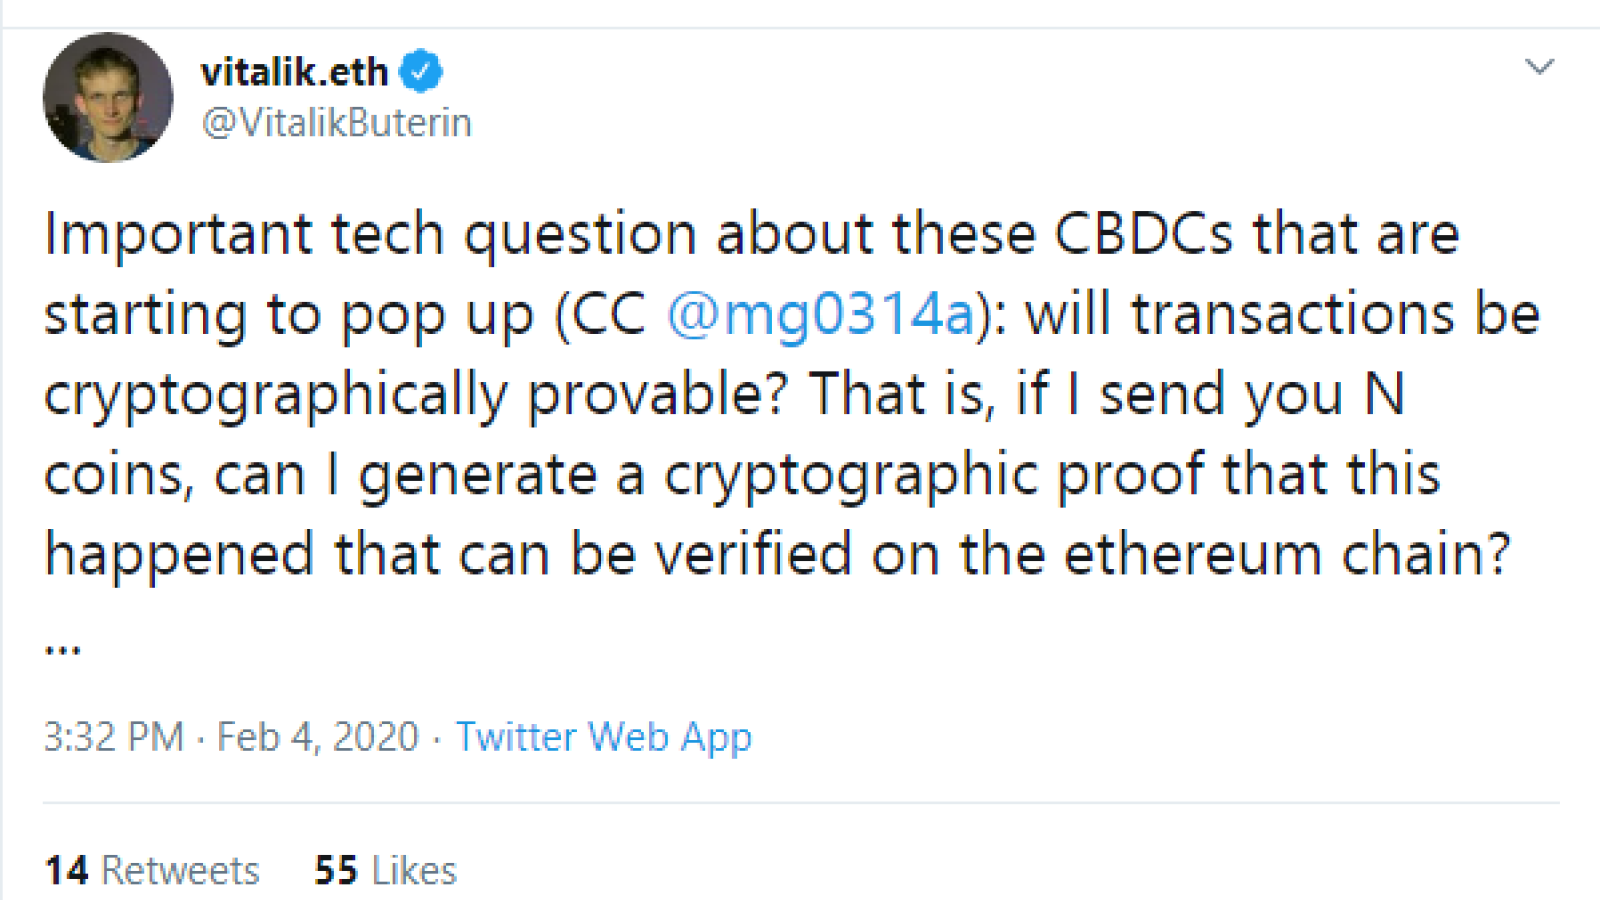 Vitalik Buterin doubts the cryptographic verification of CBDCs